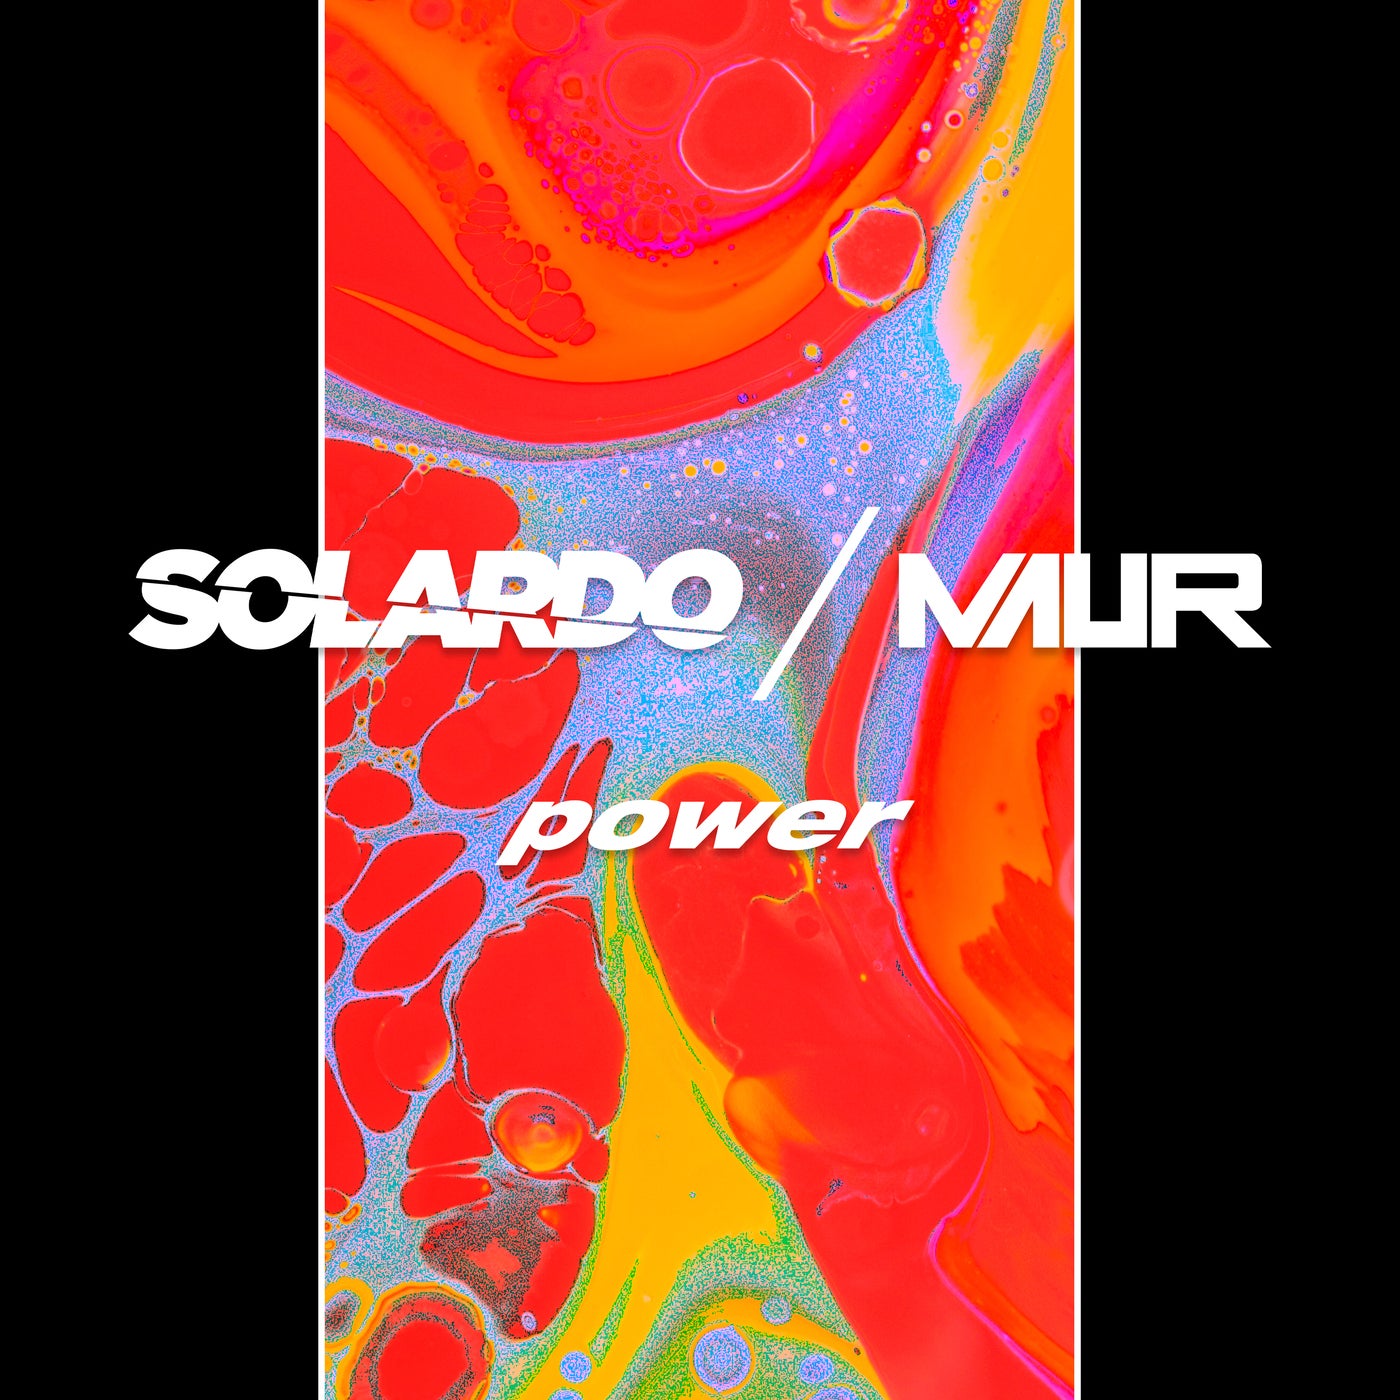 Maur, Solardo – Power – Extended Mix [UL03330]